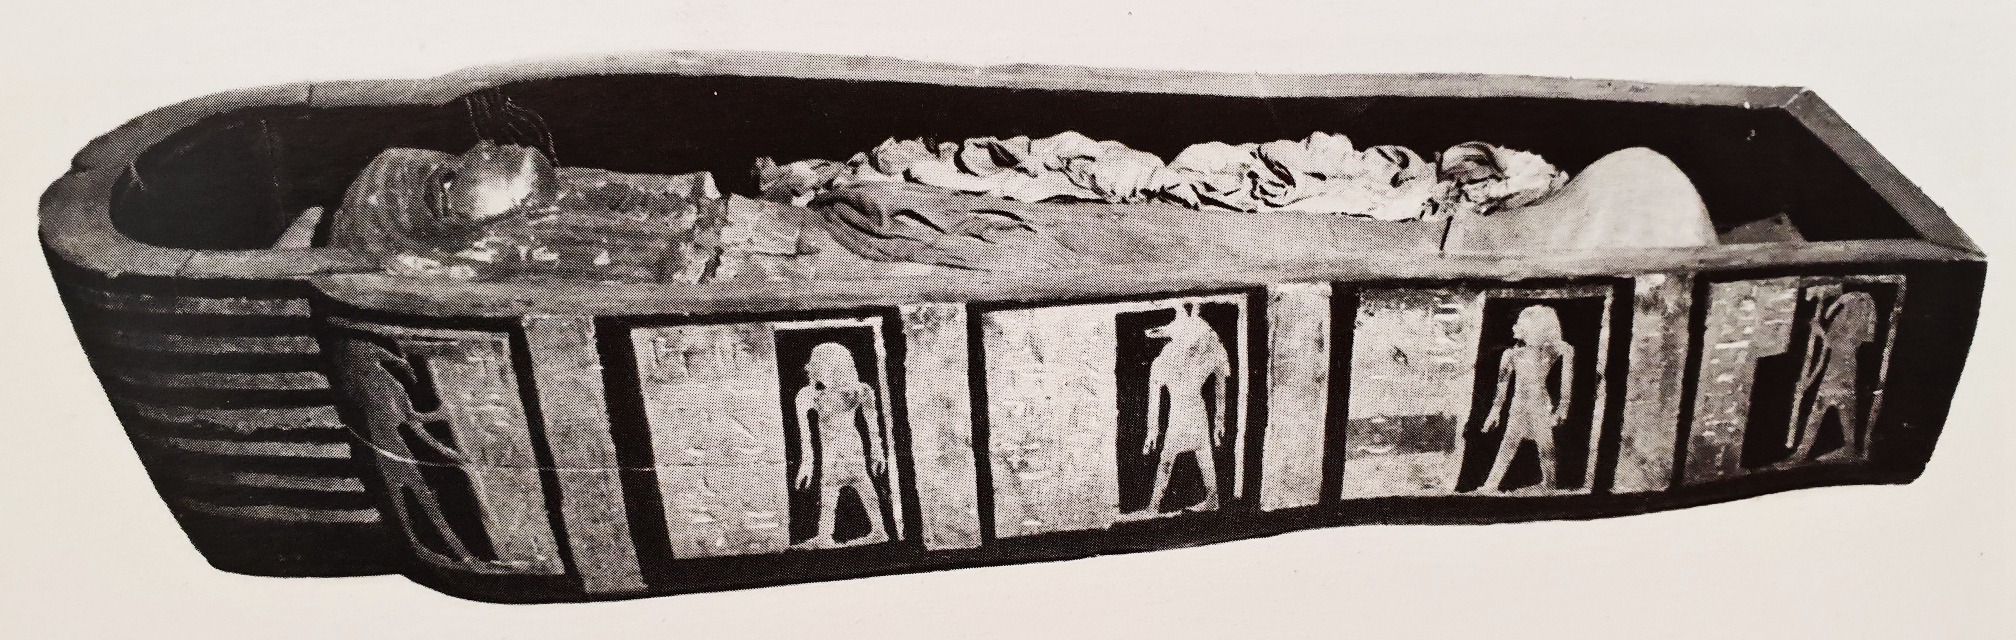 Kha - Coffins Merit (2)b